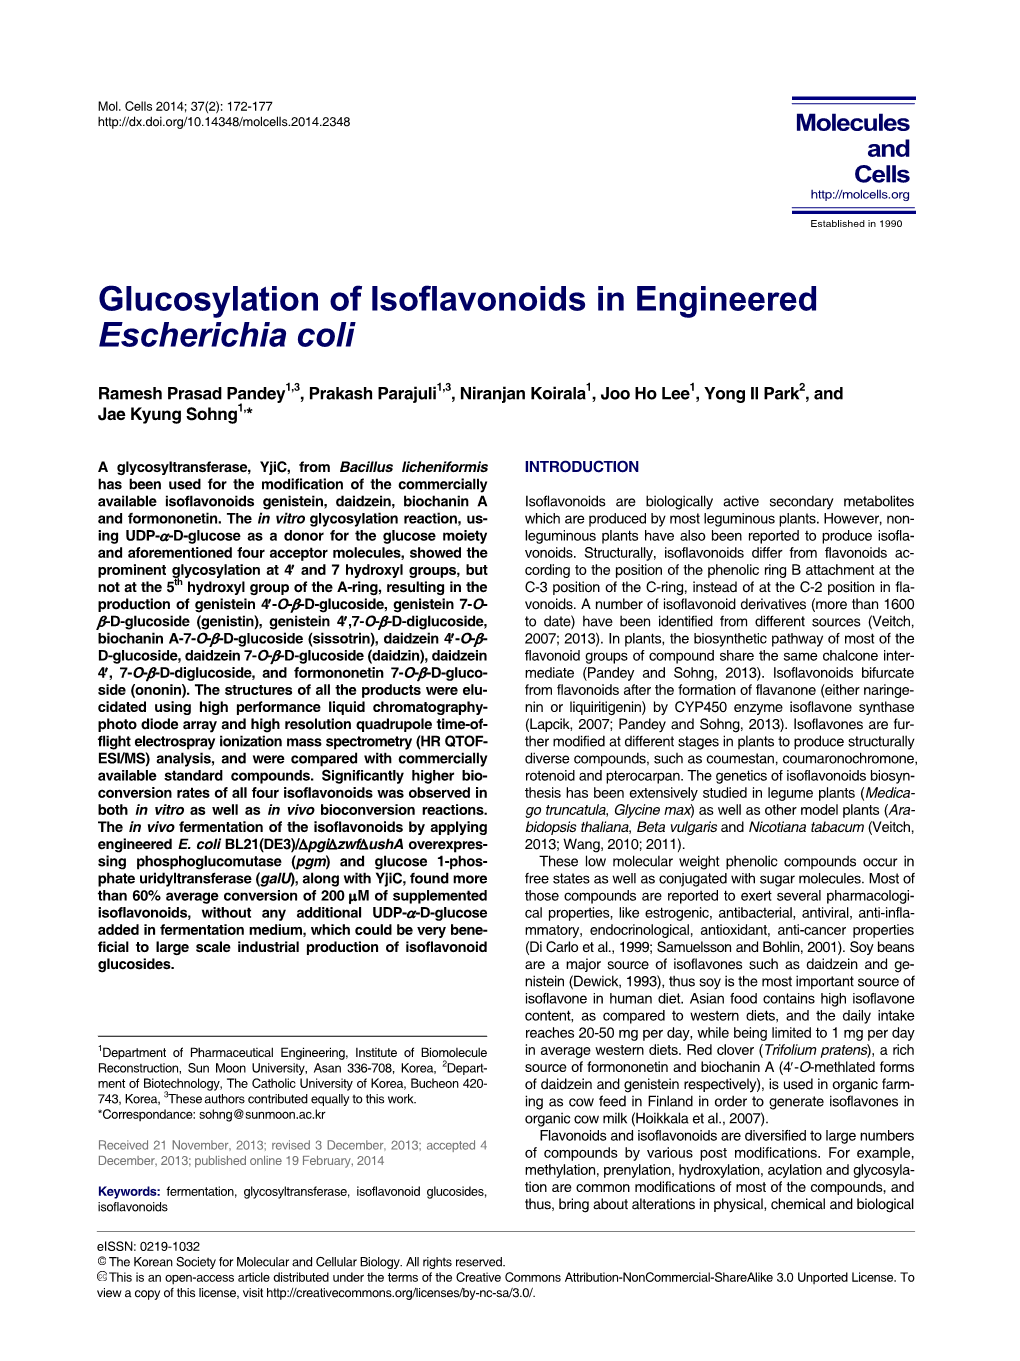 Glucosylation of Isoflavonoids in Engineered Escherichia Coli